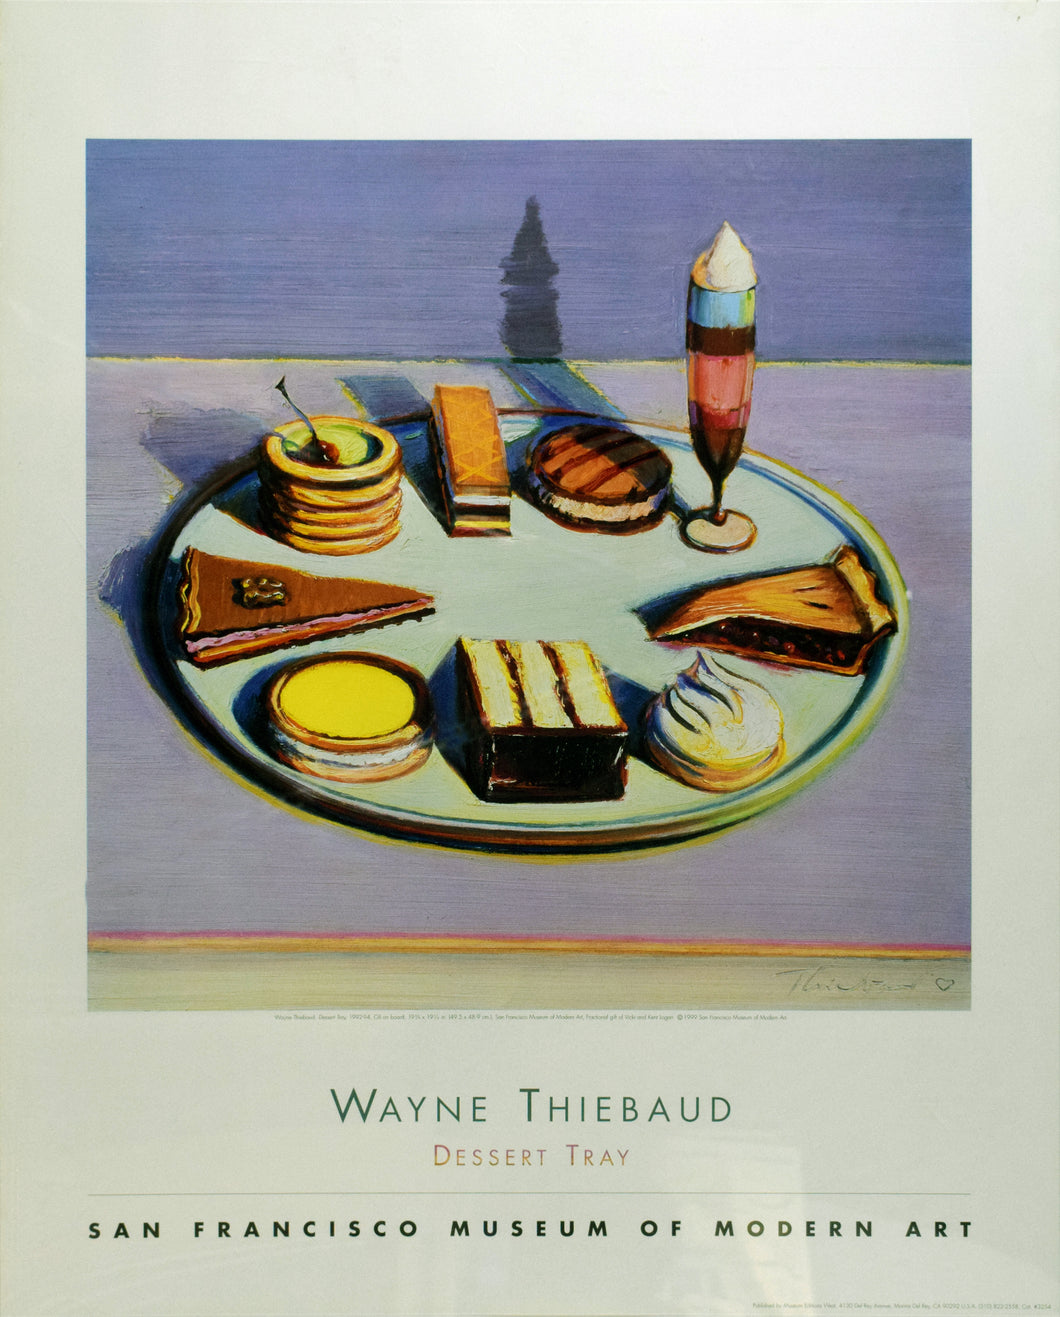 Dessert Tray by Wayne Thiebaud